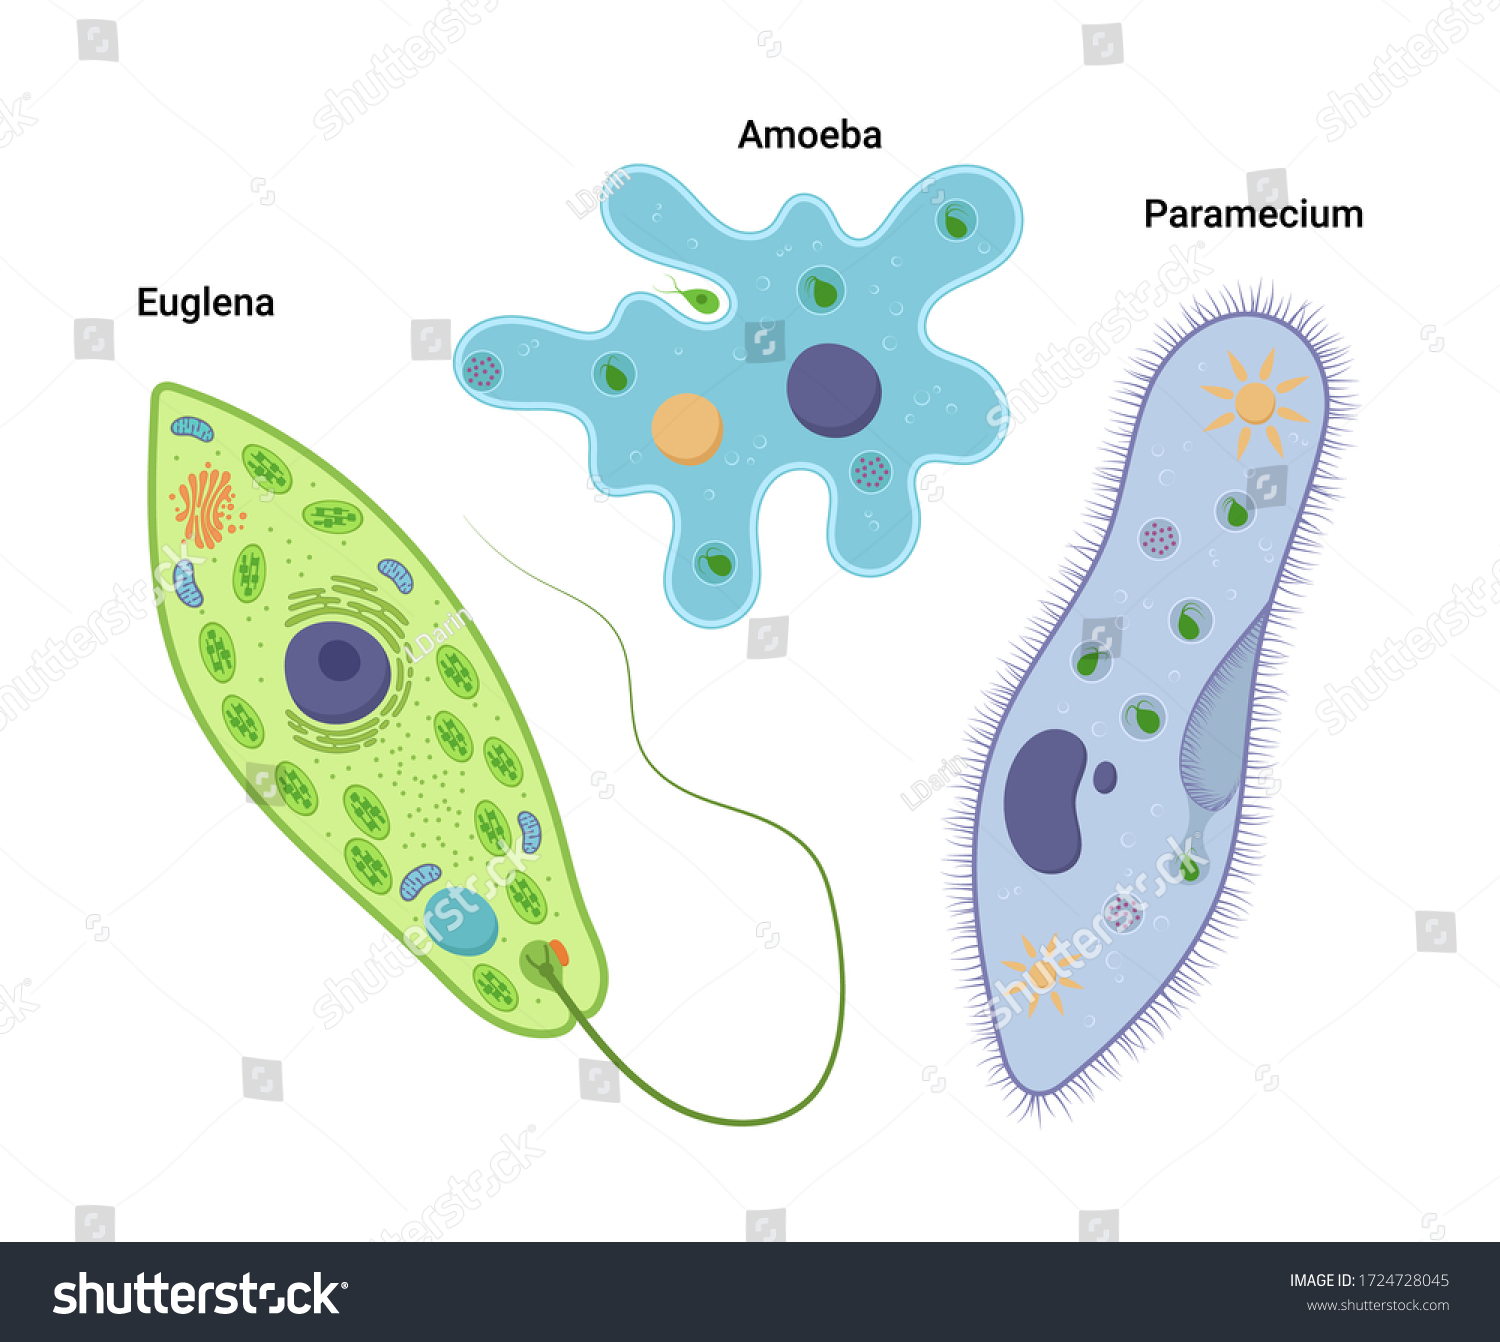 Unicellular Organisms Images Stock Photos Vectors Shutterstock